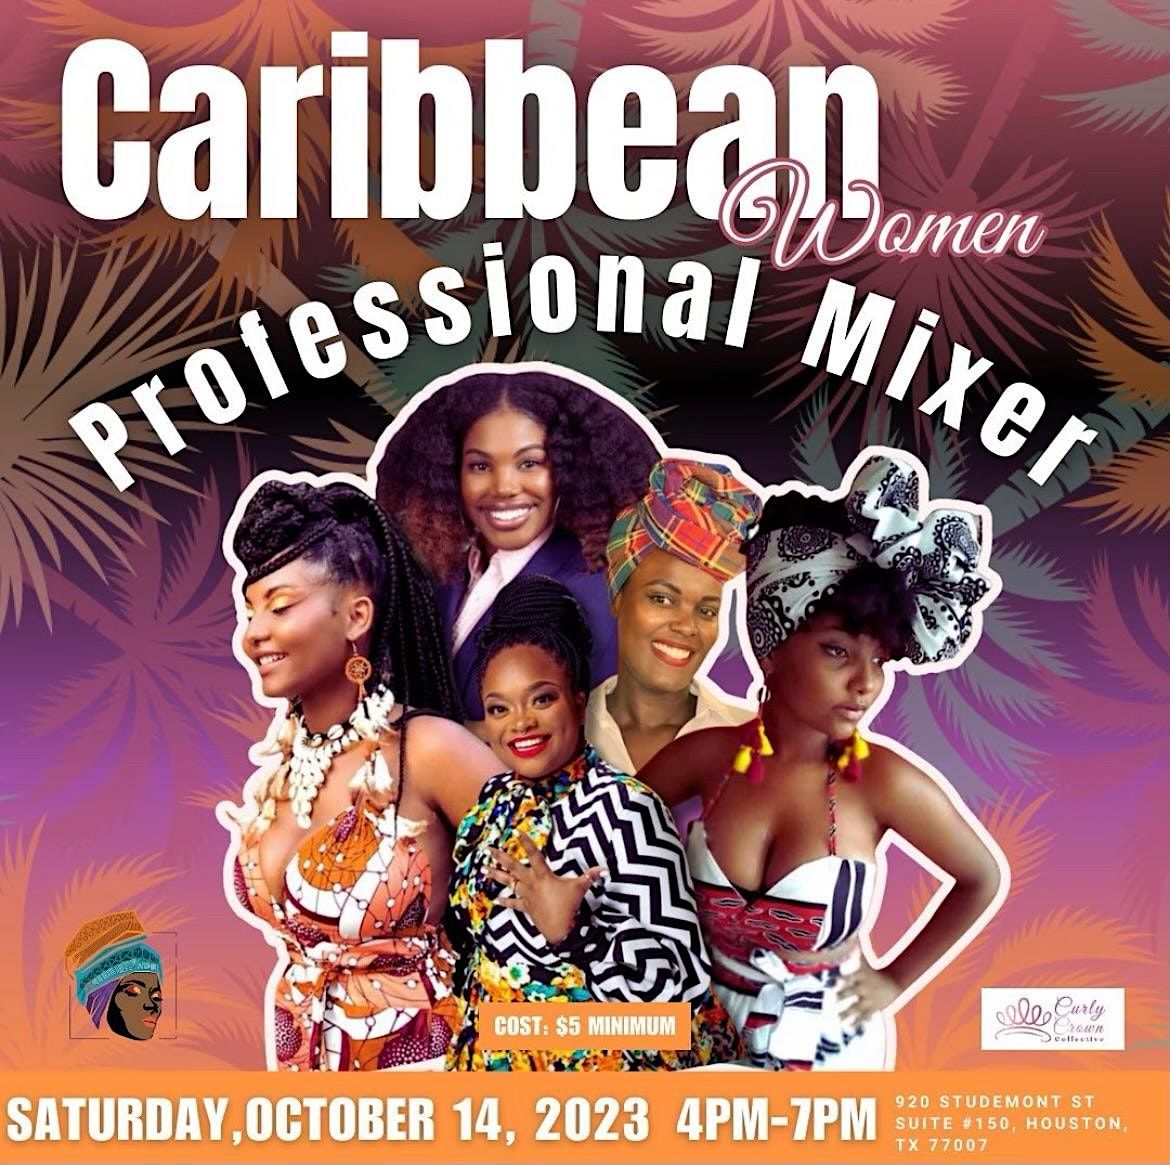 Caribbean Women Professional Mixer